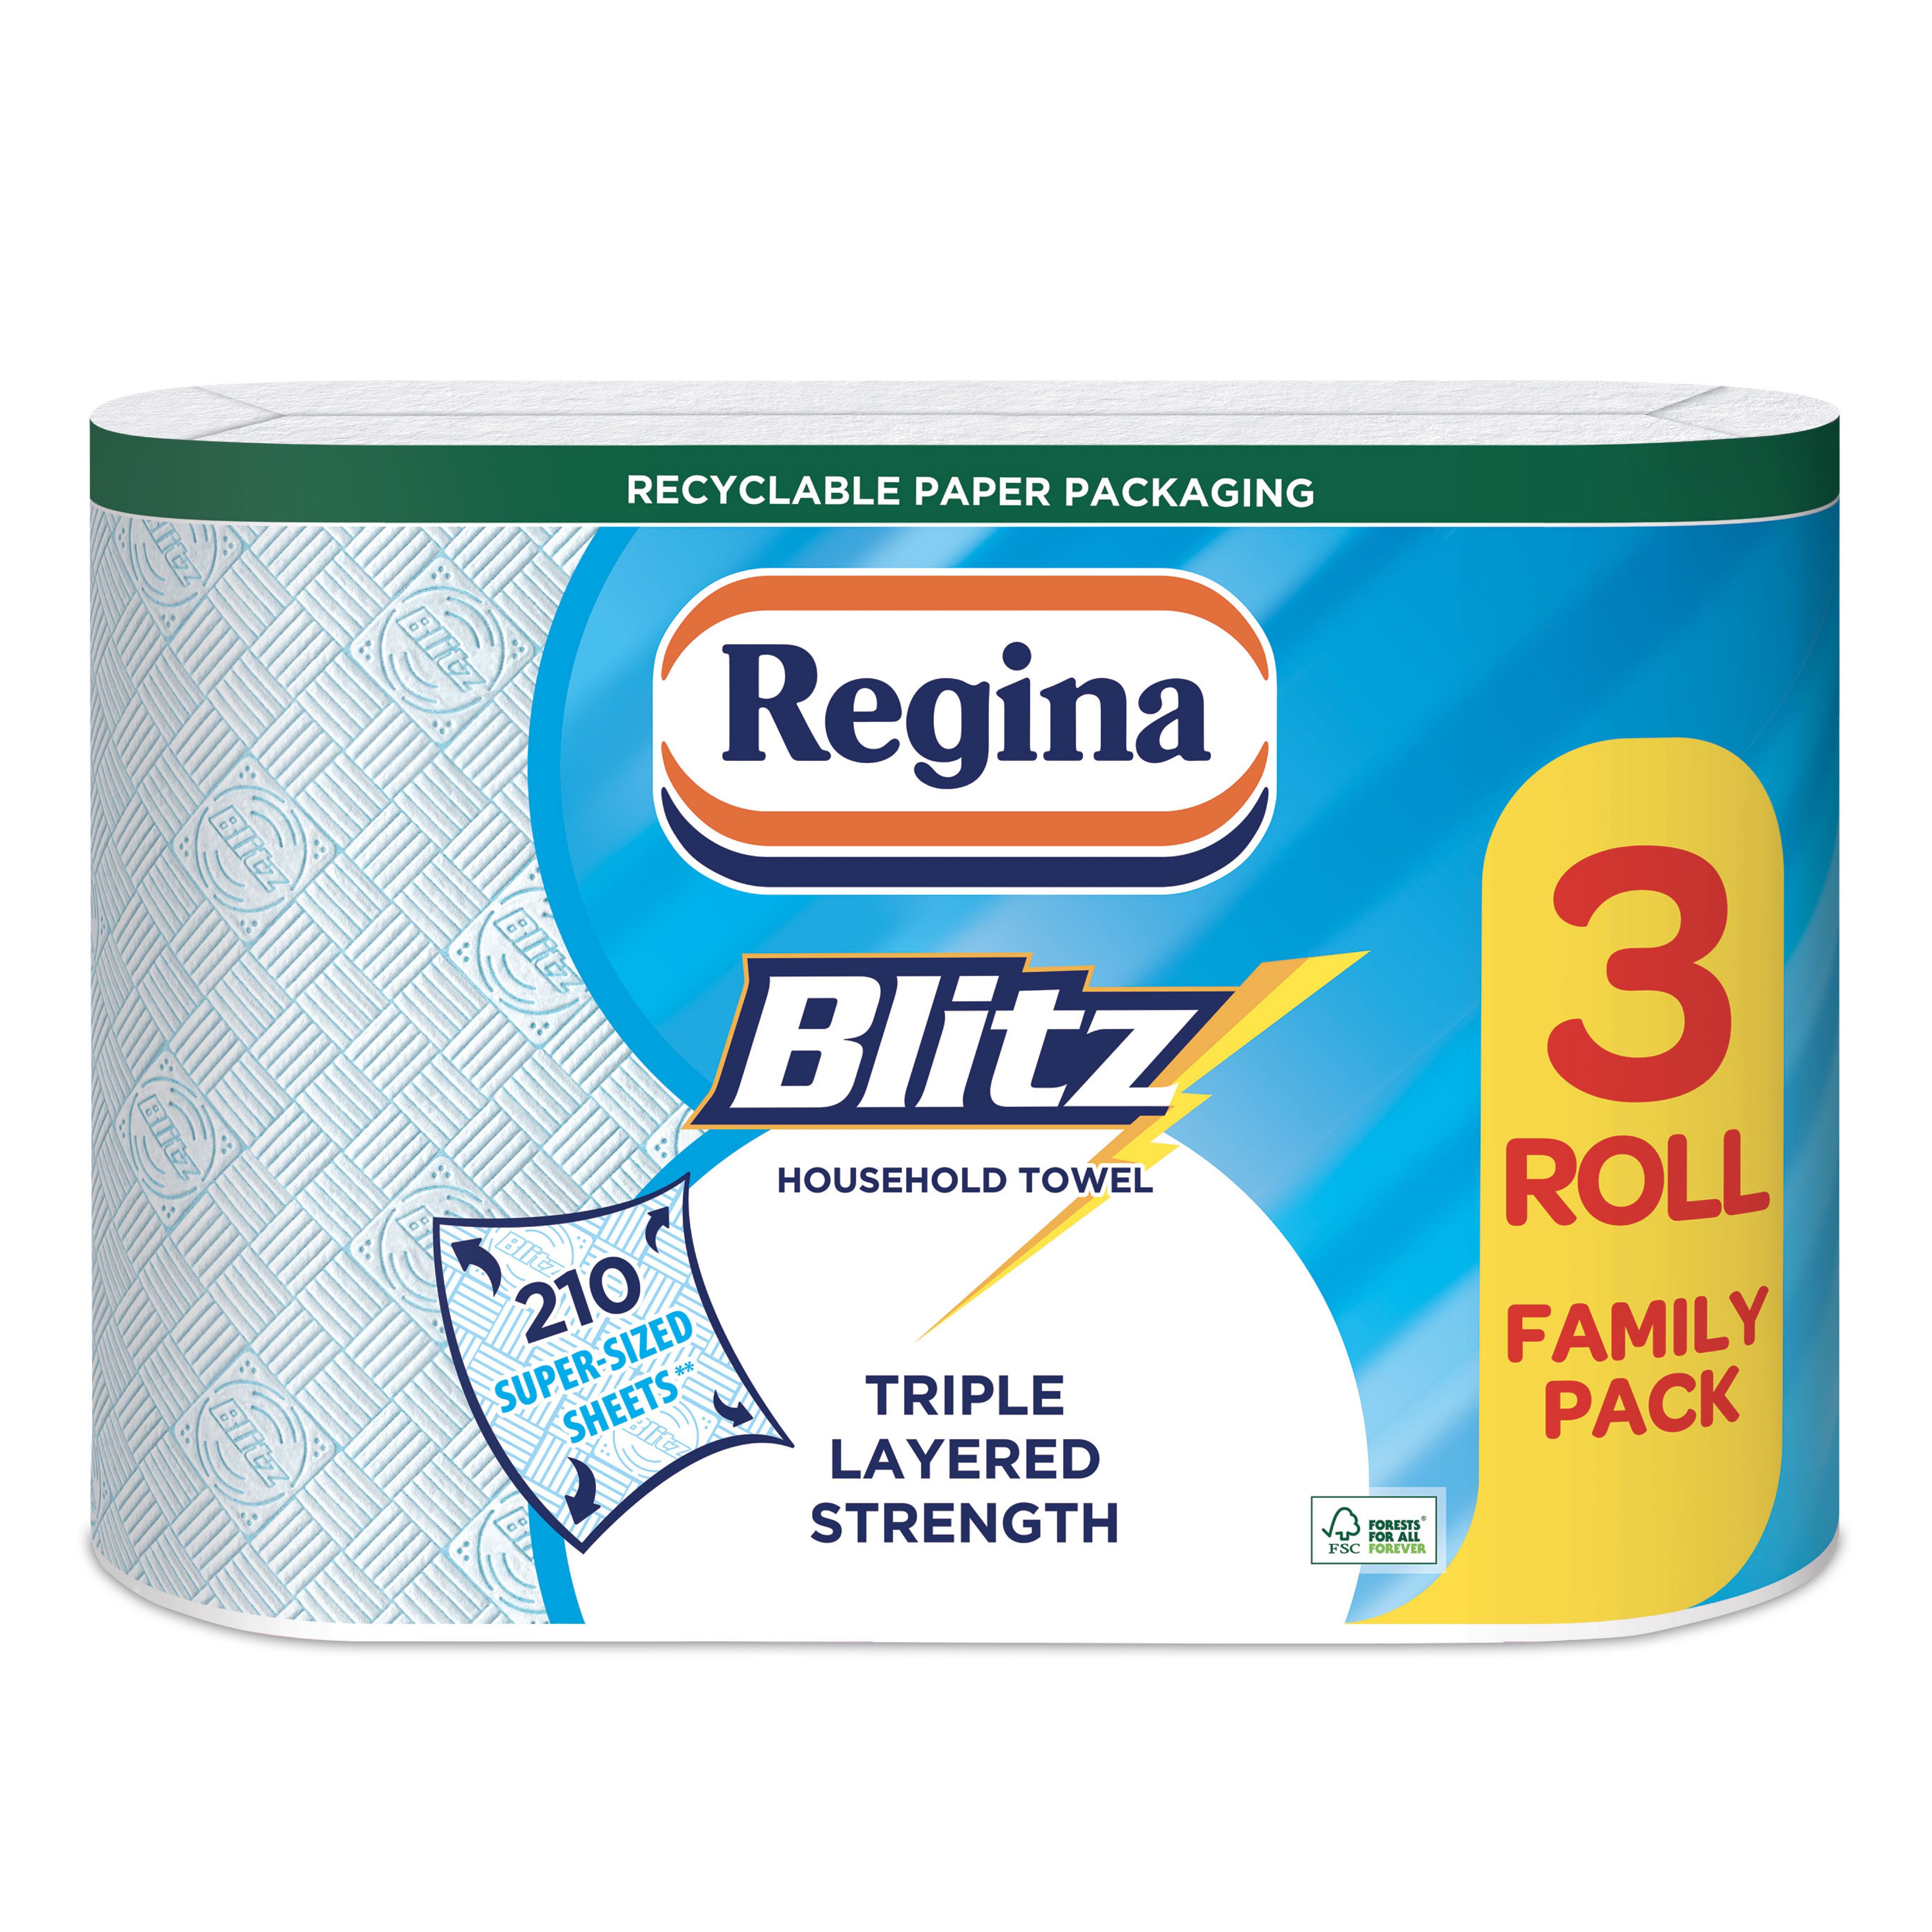 Regina Blitz Blue & white Paper roll, Pack of 3